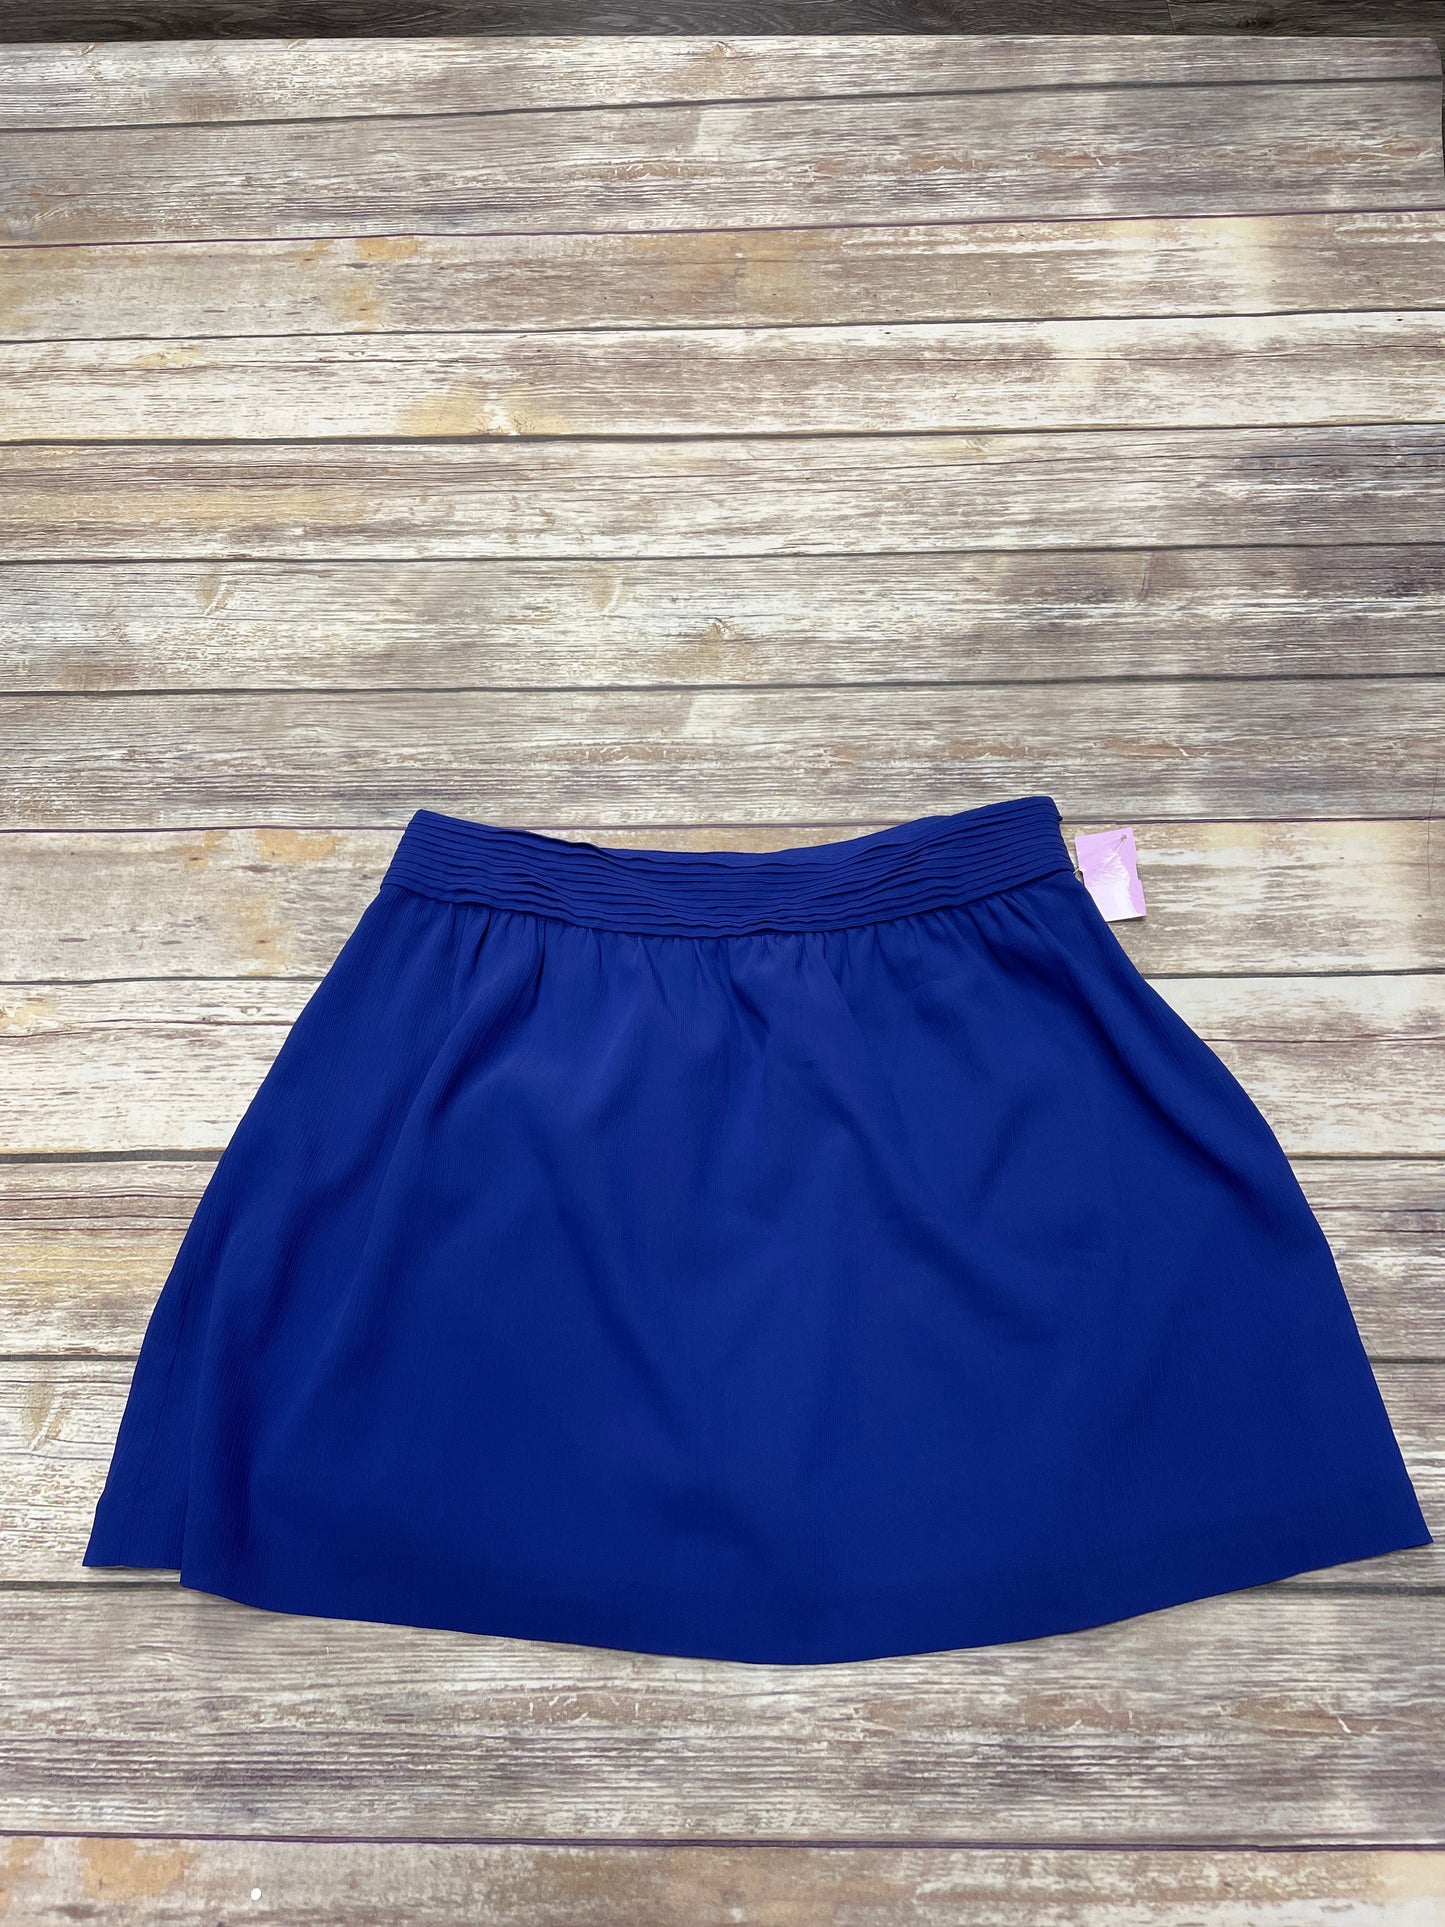 Blue Skirt Mini & Short Loft, Size 8